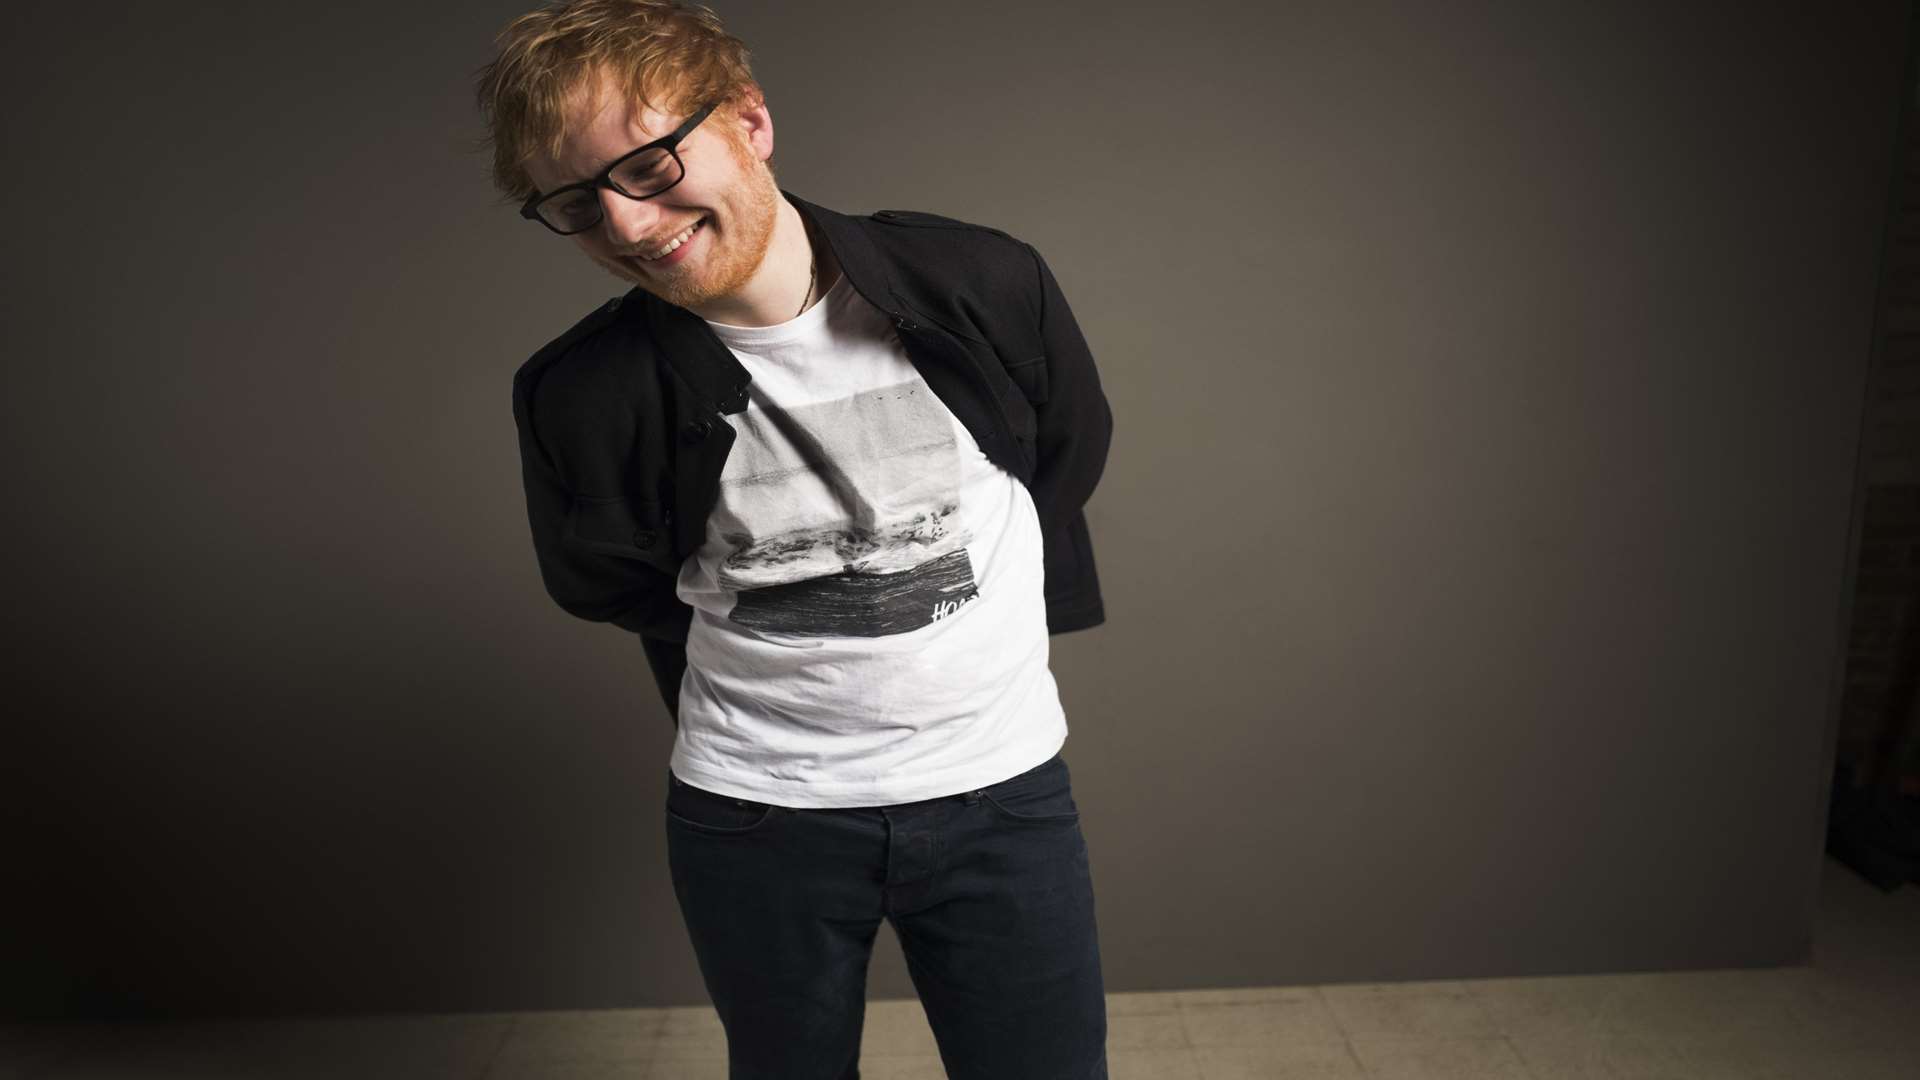 Ed Sheeran is coming to Maidstone